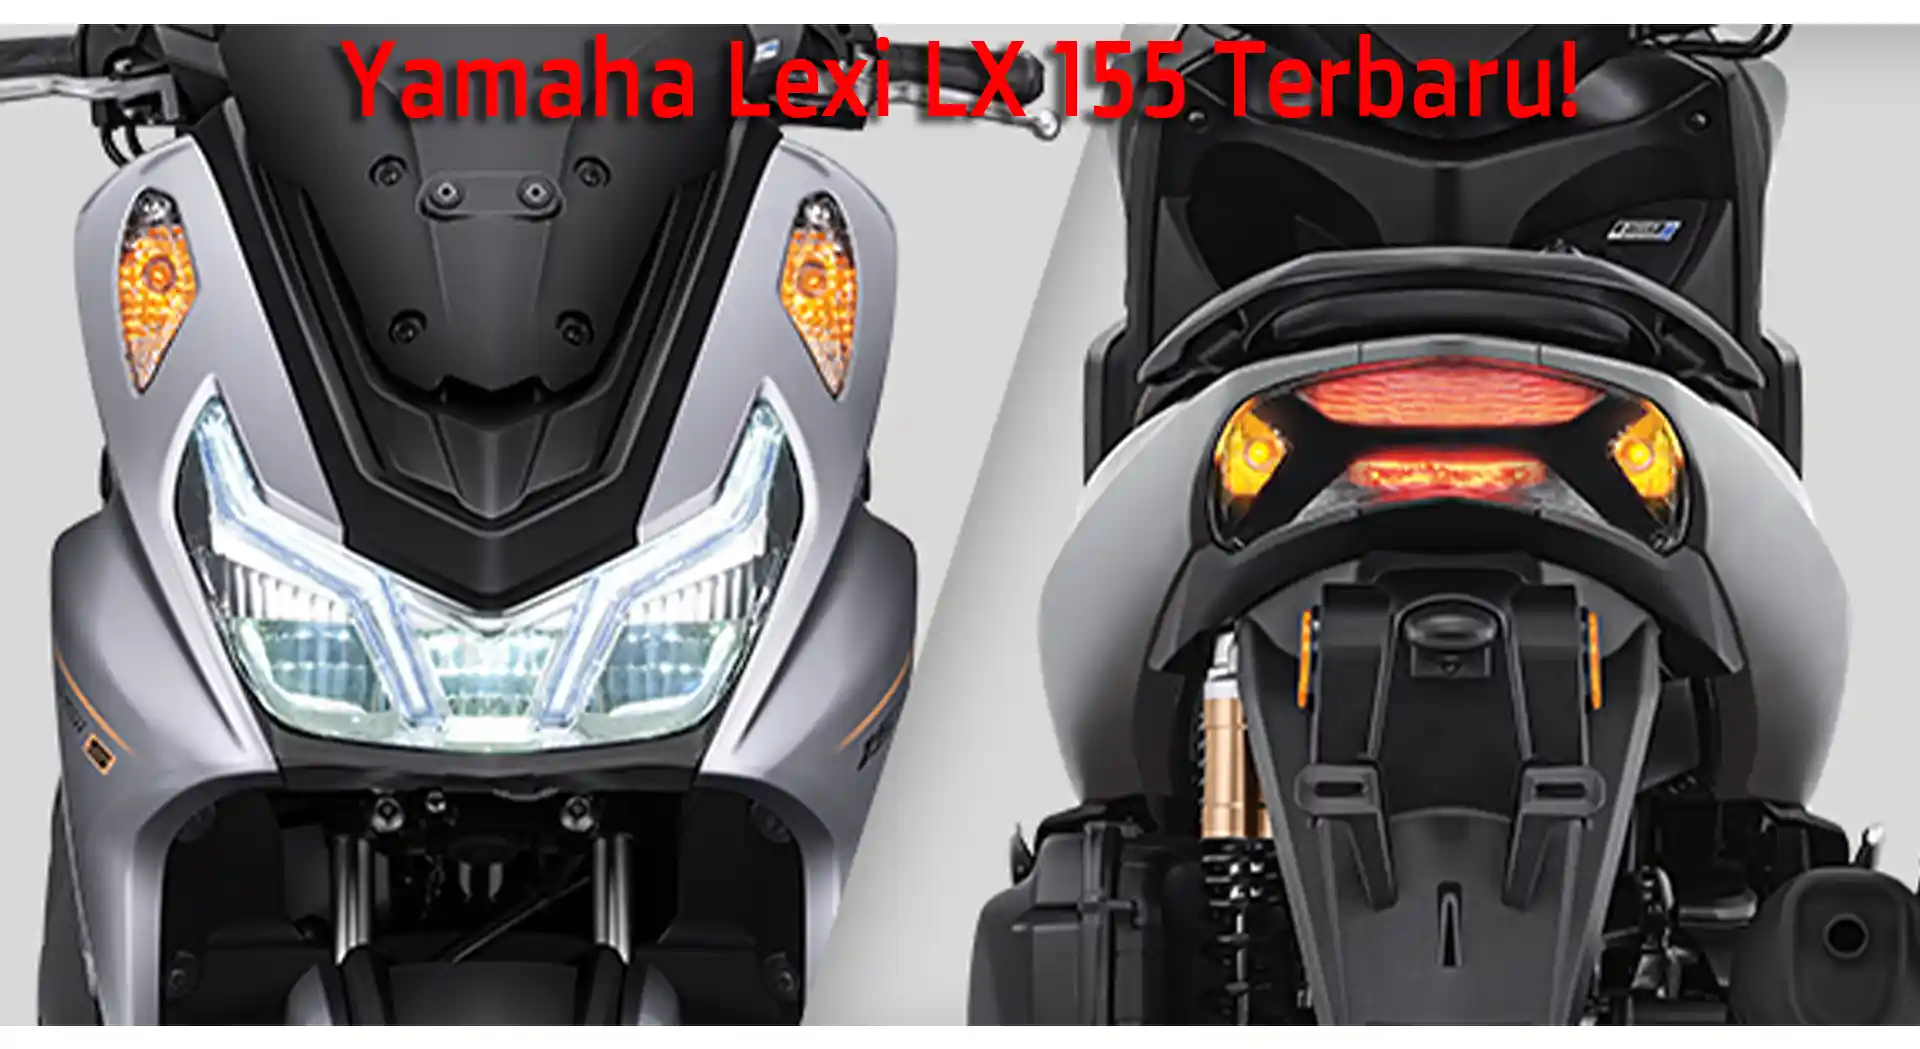 Akhirnya Meluncur! Yamaha Lexi LX 155 Resmi Rilis dengan Harga Mulai Rp 25 Jutaan